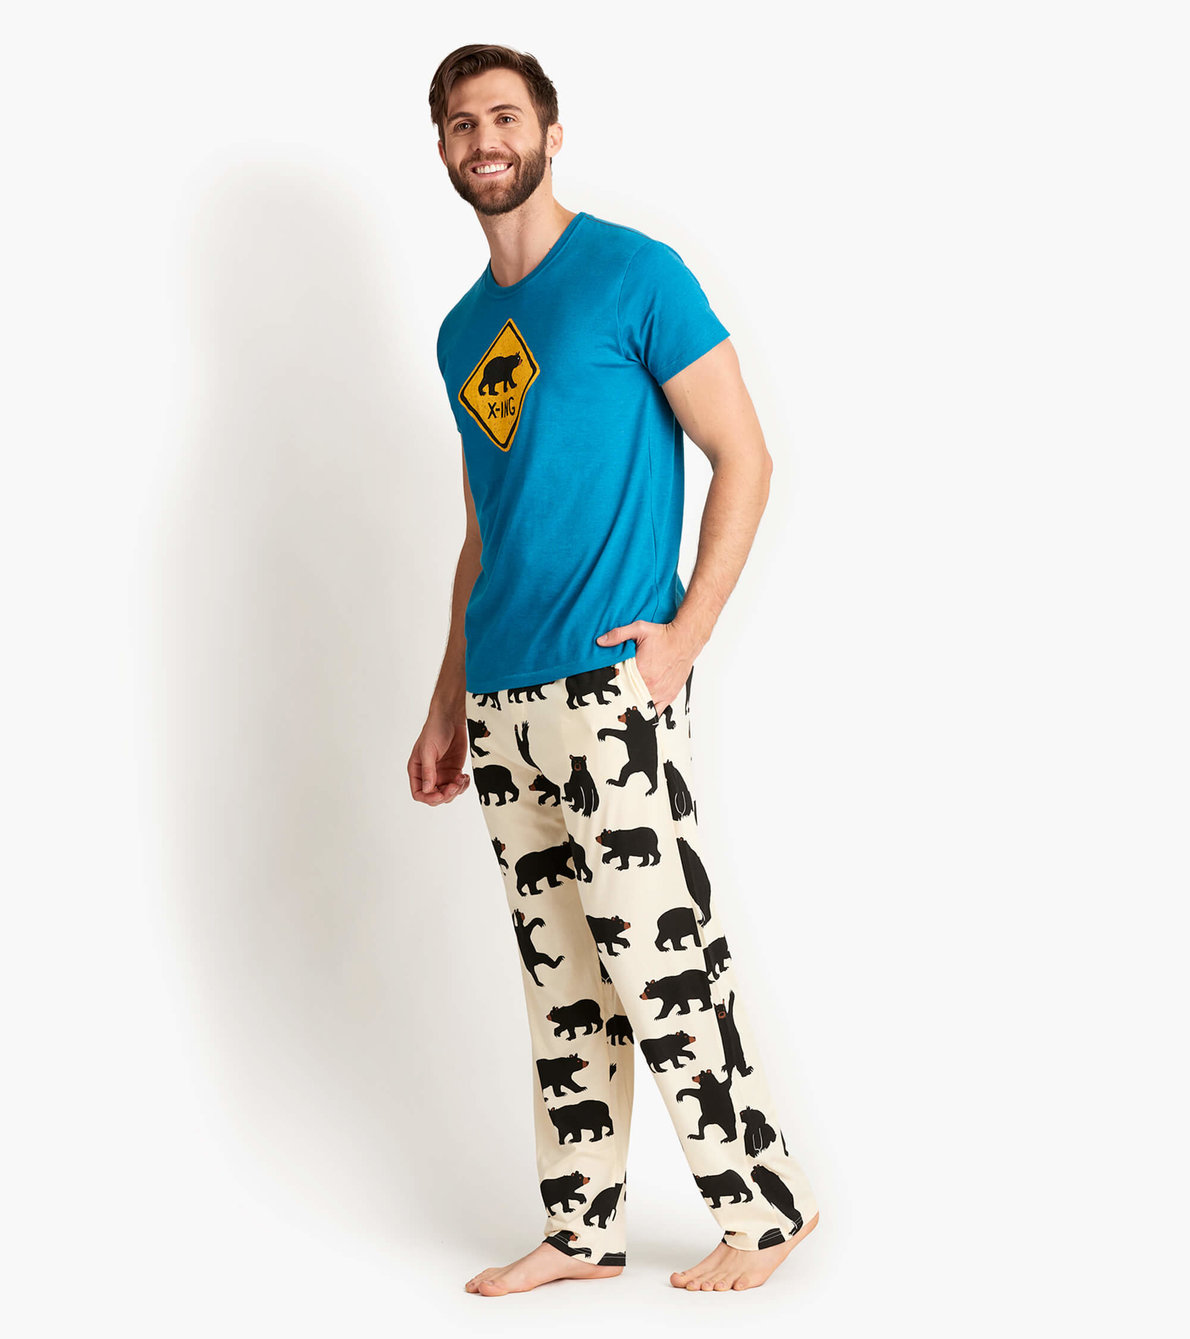 View larger image of Black Bears Men's Tee and Pants Pajama Separates